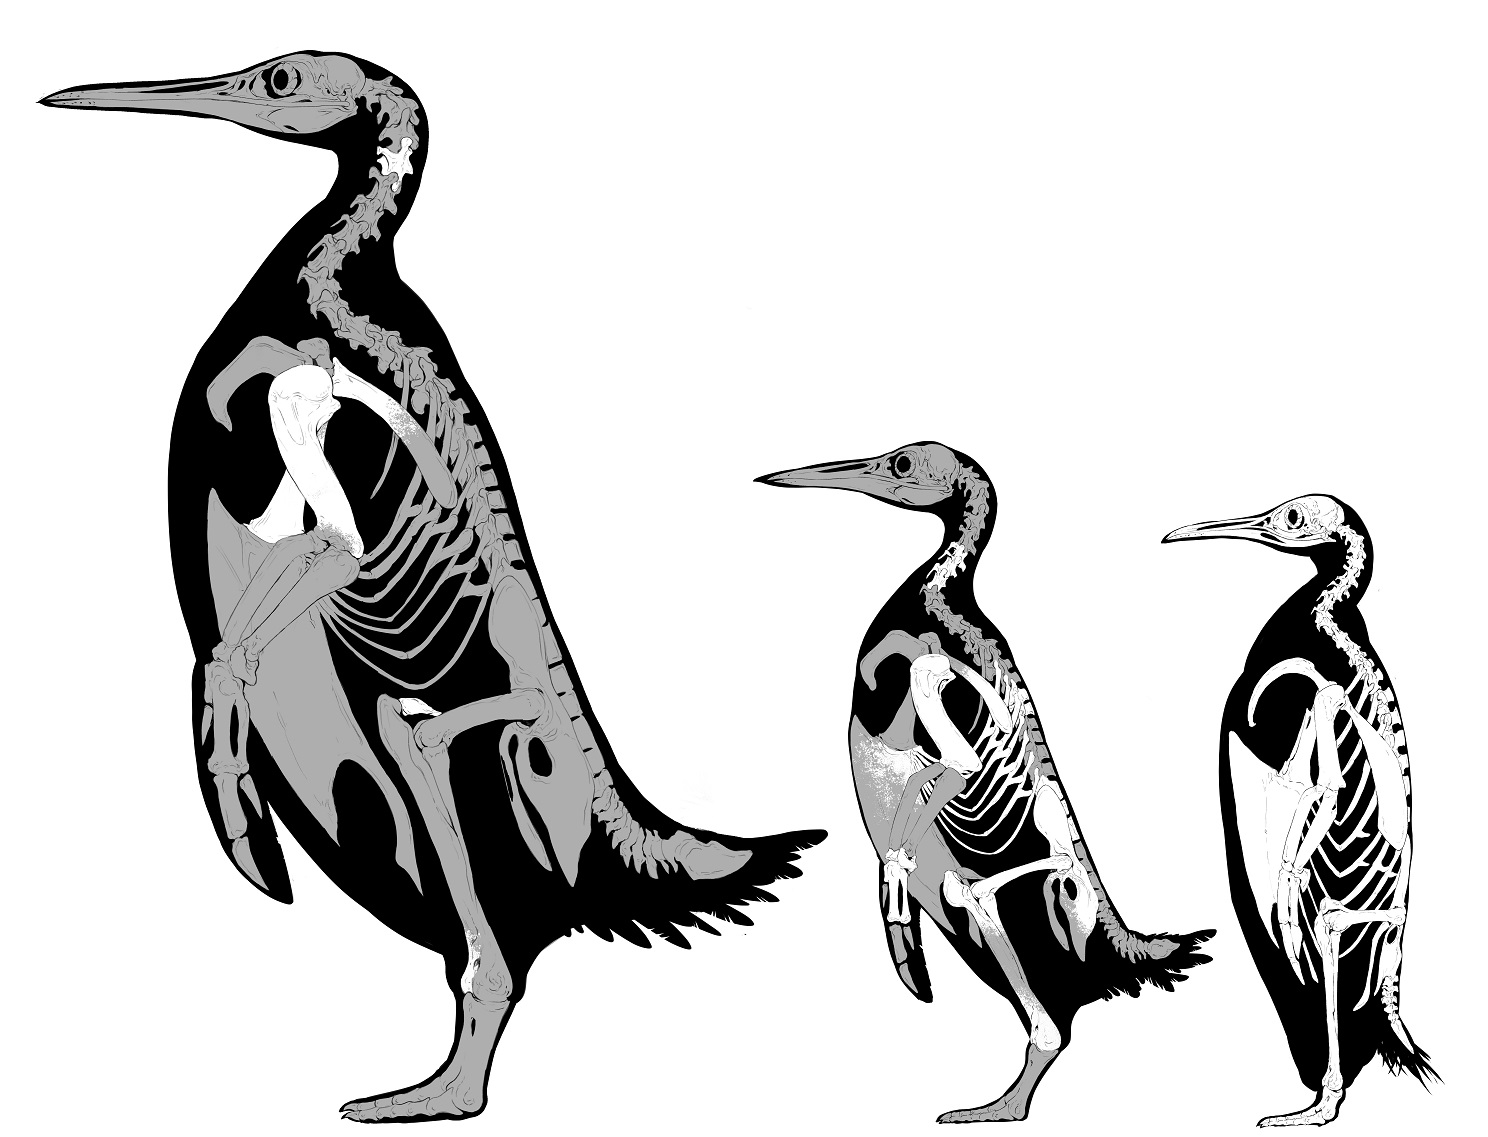 Diagrams of 3 penguin skeletons in decreasing size